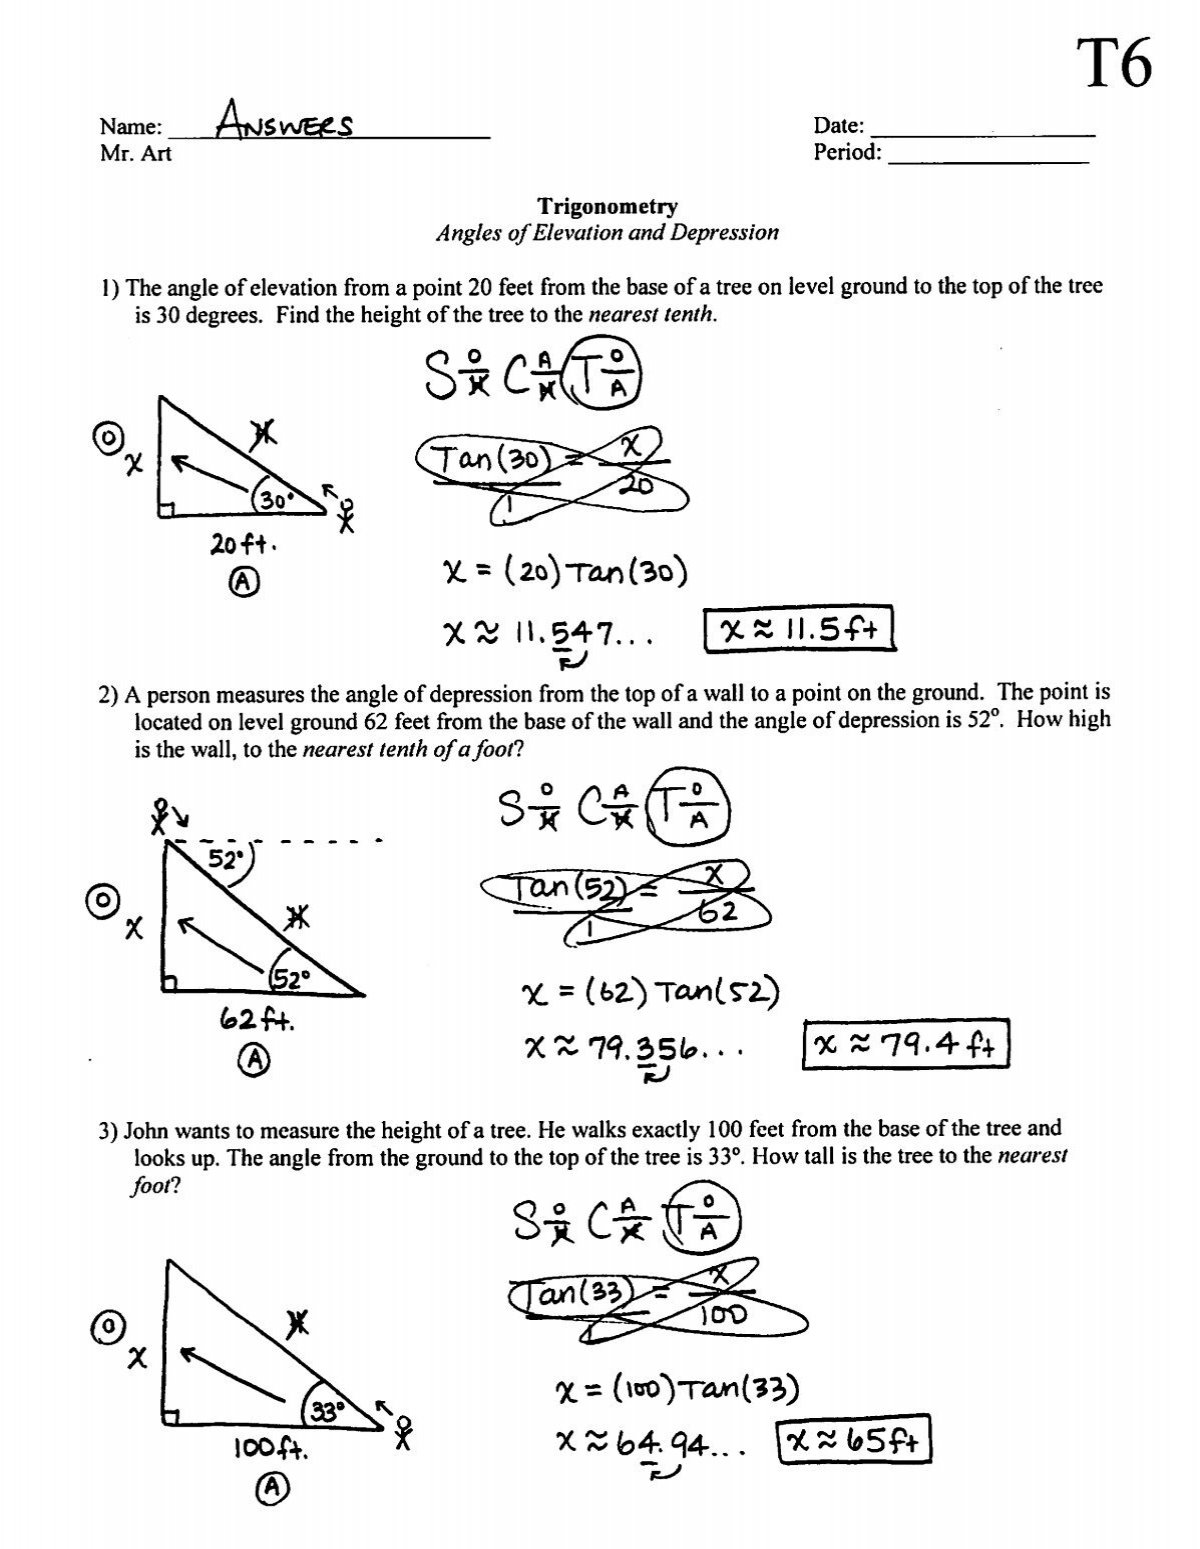 trigonometry angle of elevation amp depression t6 answers pdf